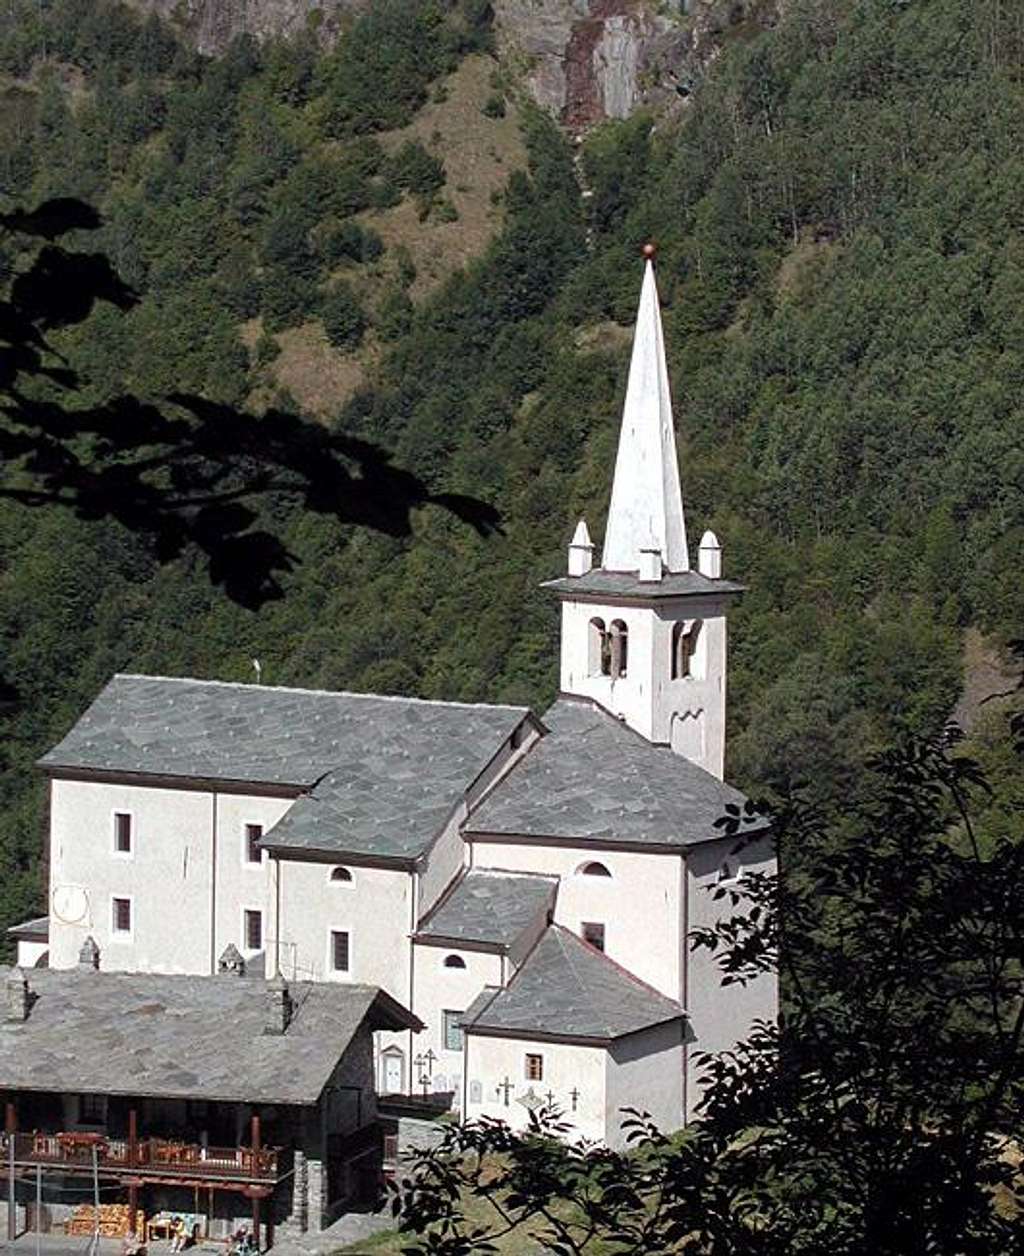 The church of Rhêmes Saint Georges